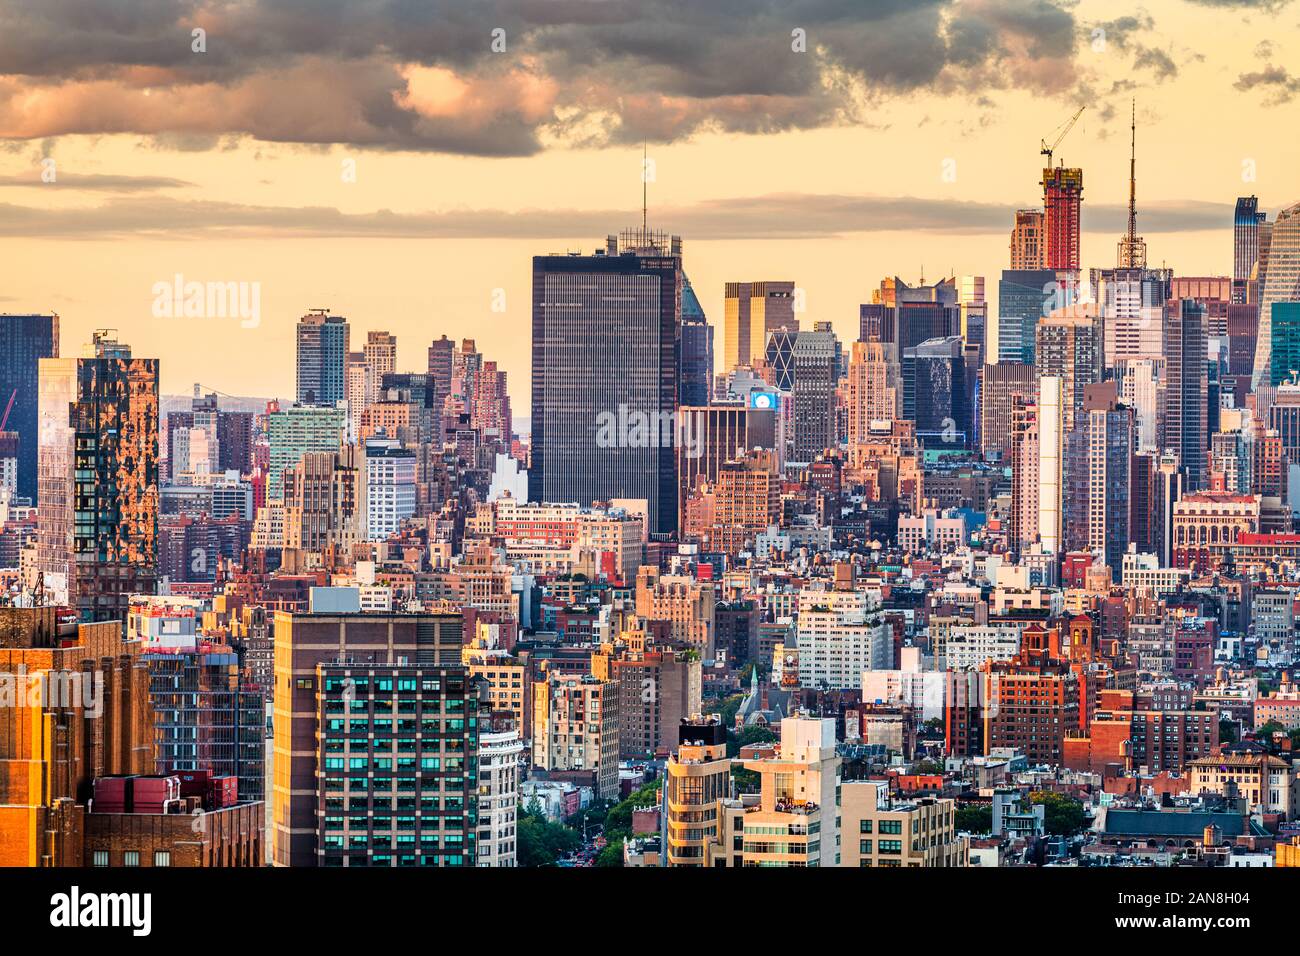 New York, New York, USA dense city skyline over Chelsea looking towards Hell's Kitchen at dusk. Stock Photo